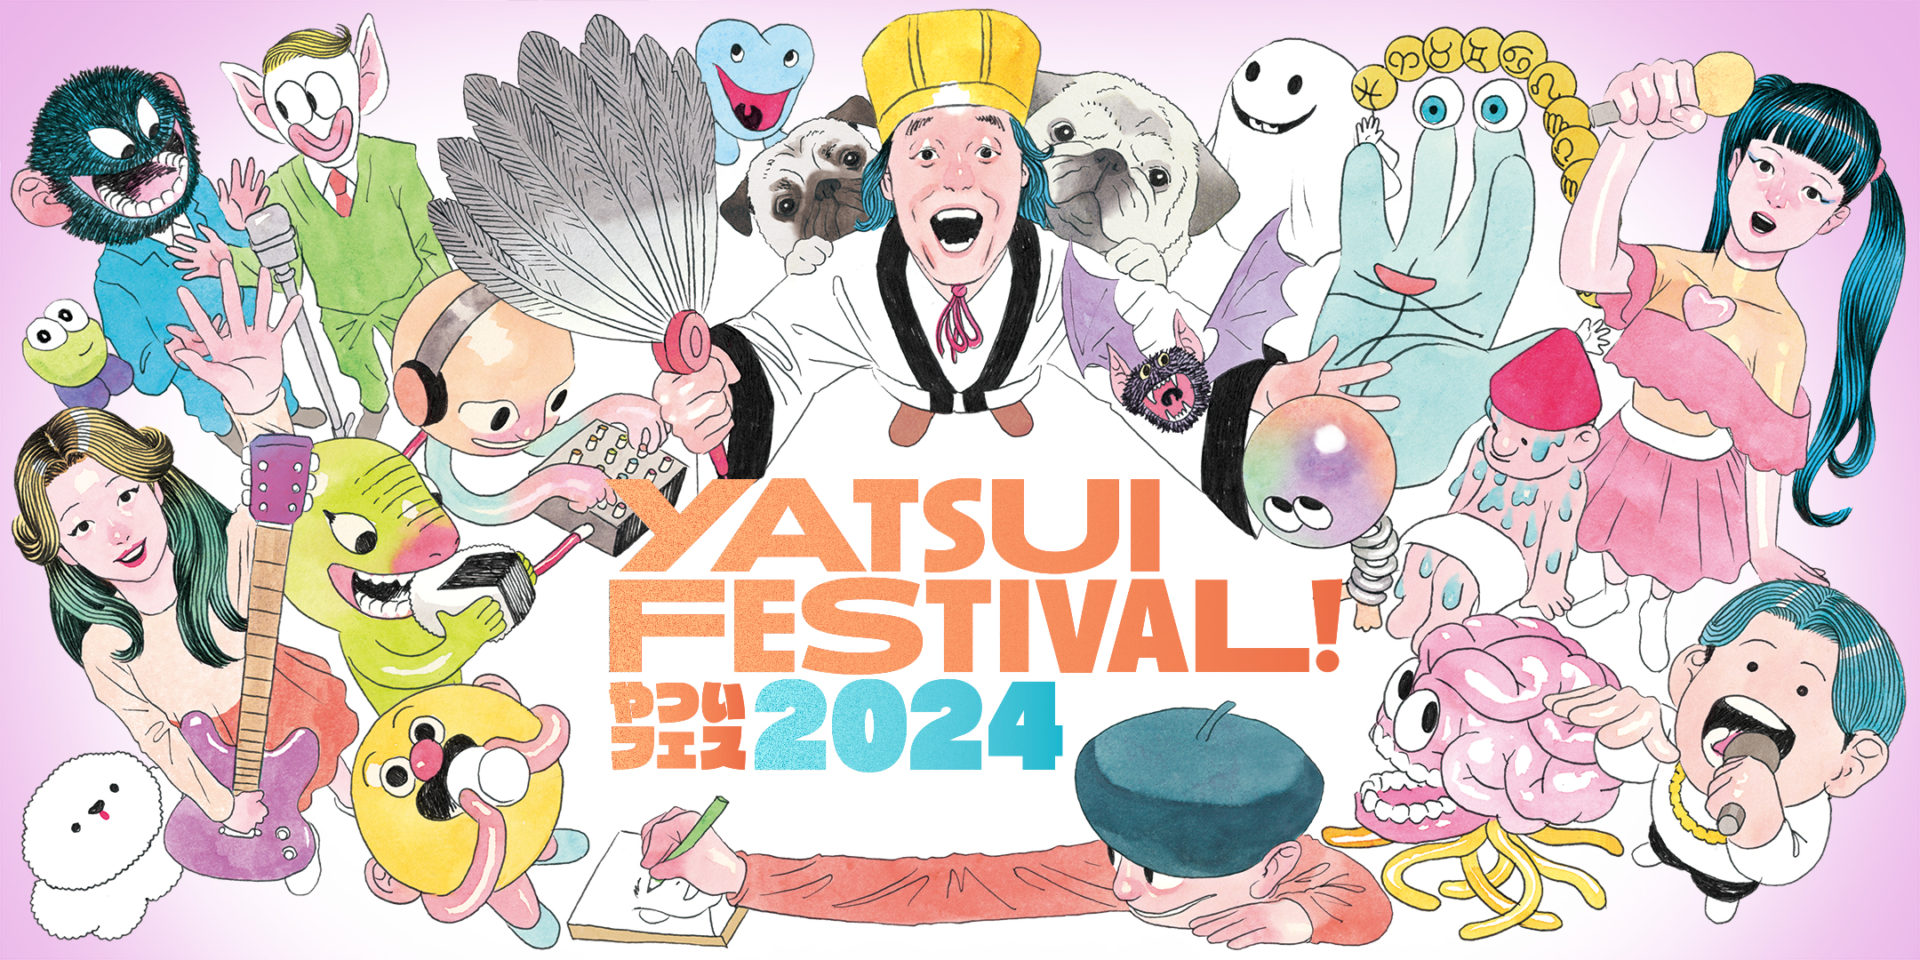 YATSUI FESTIVAL! 2024